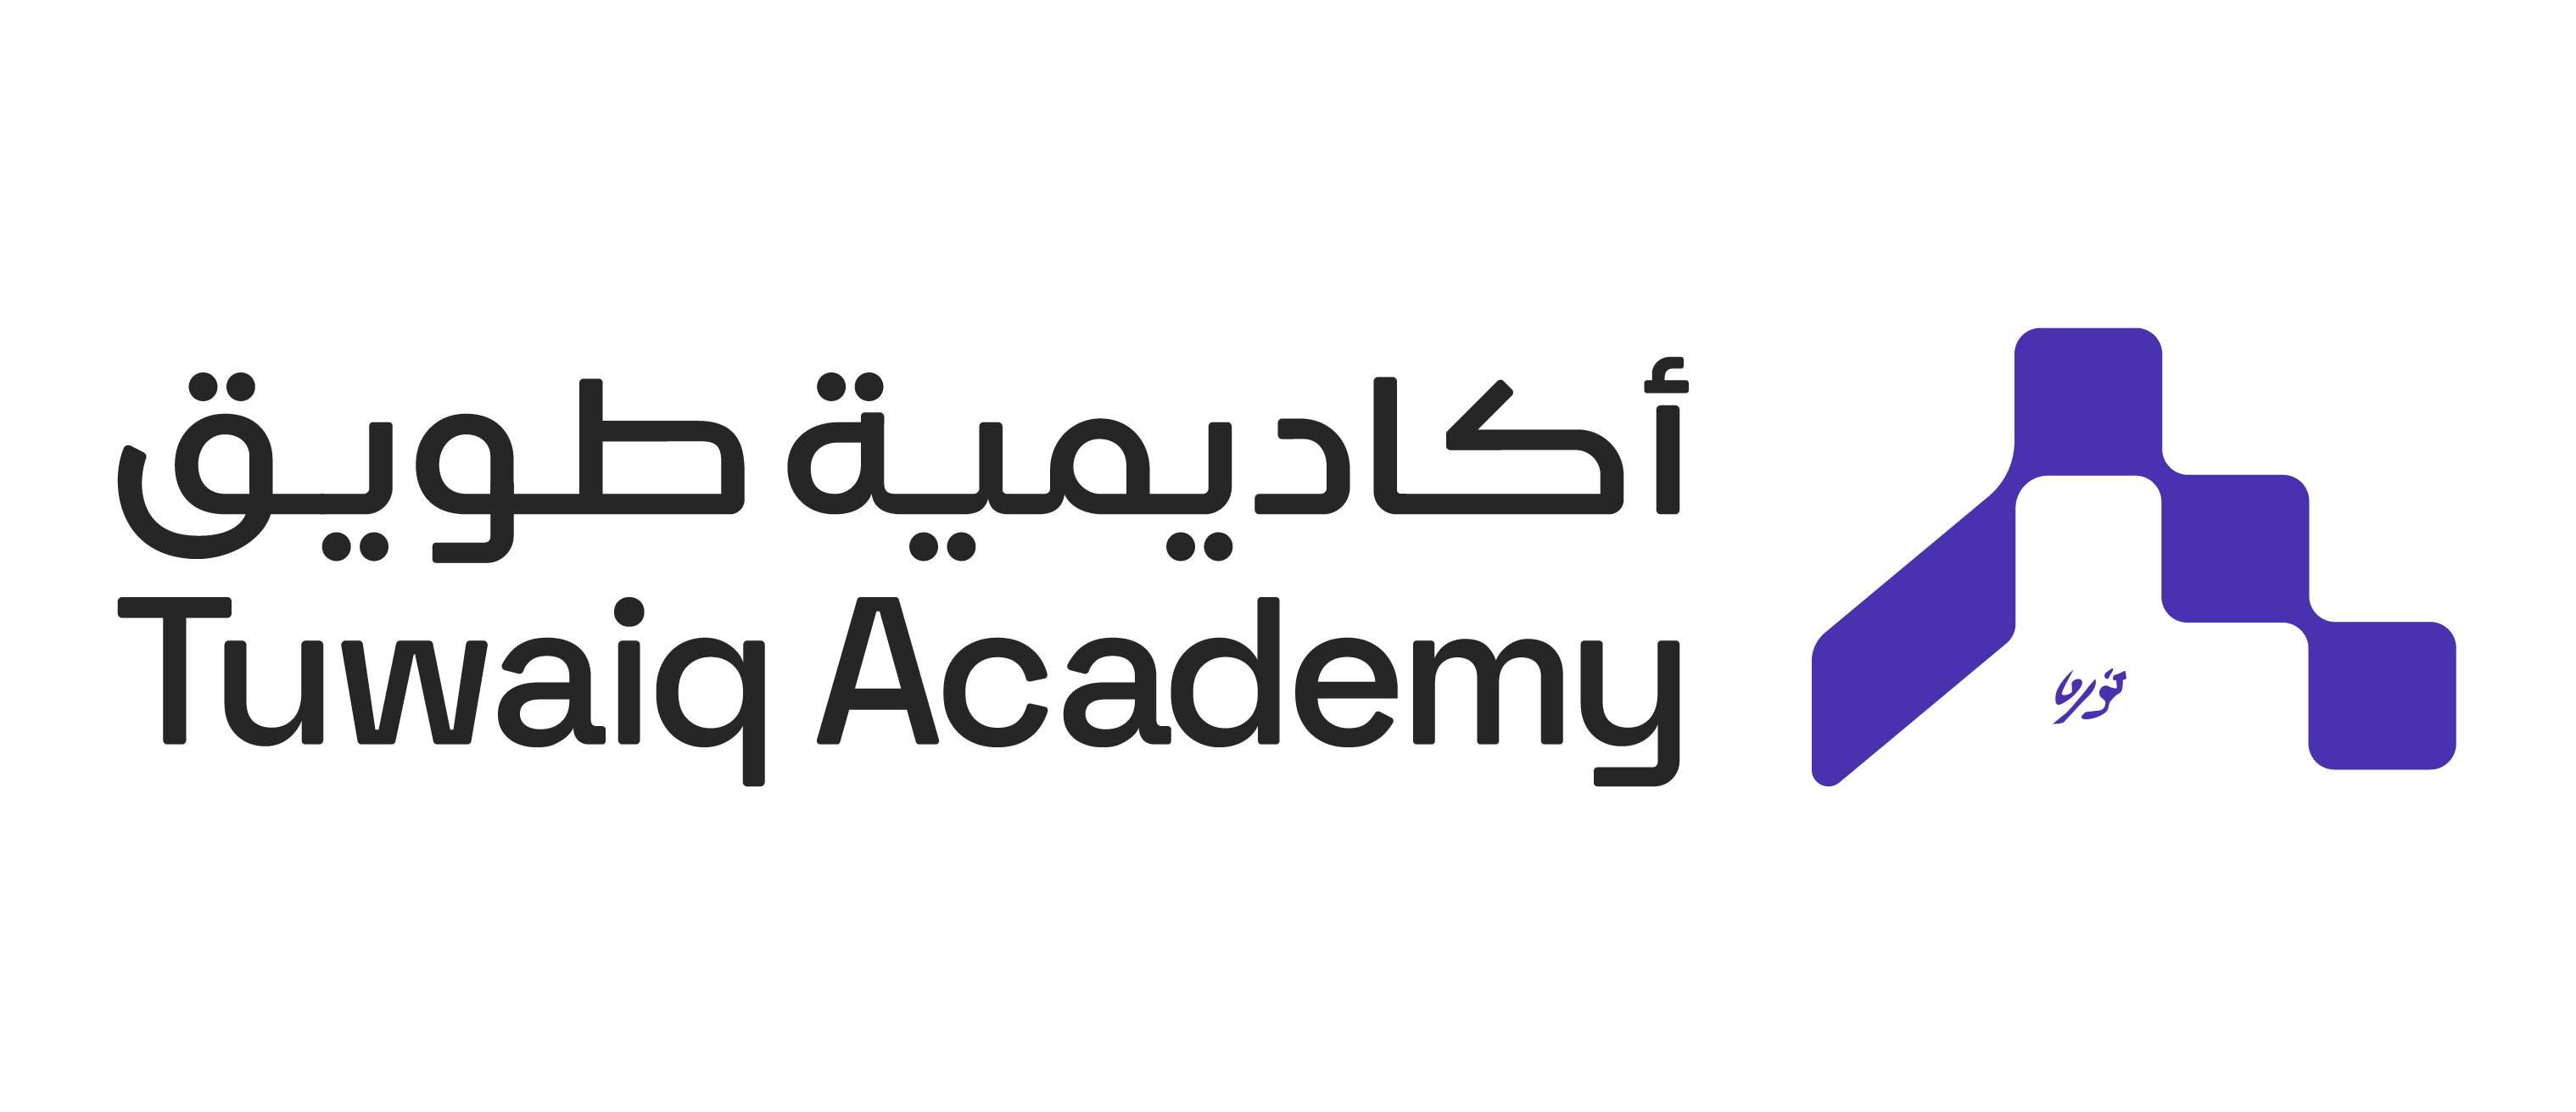 Tuwaiq Academy